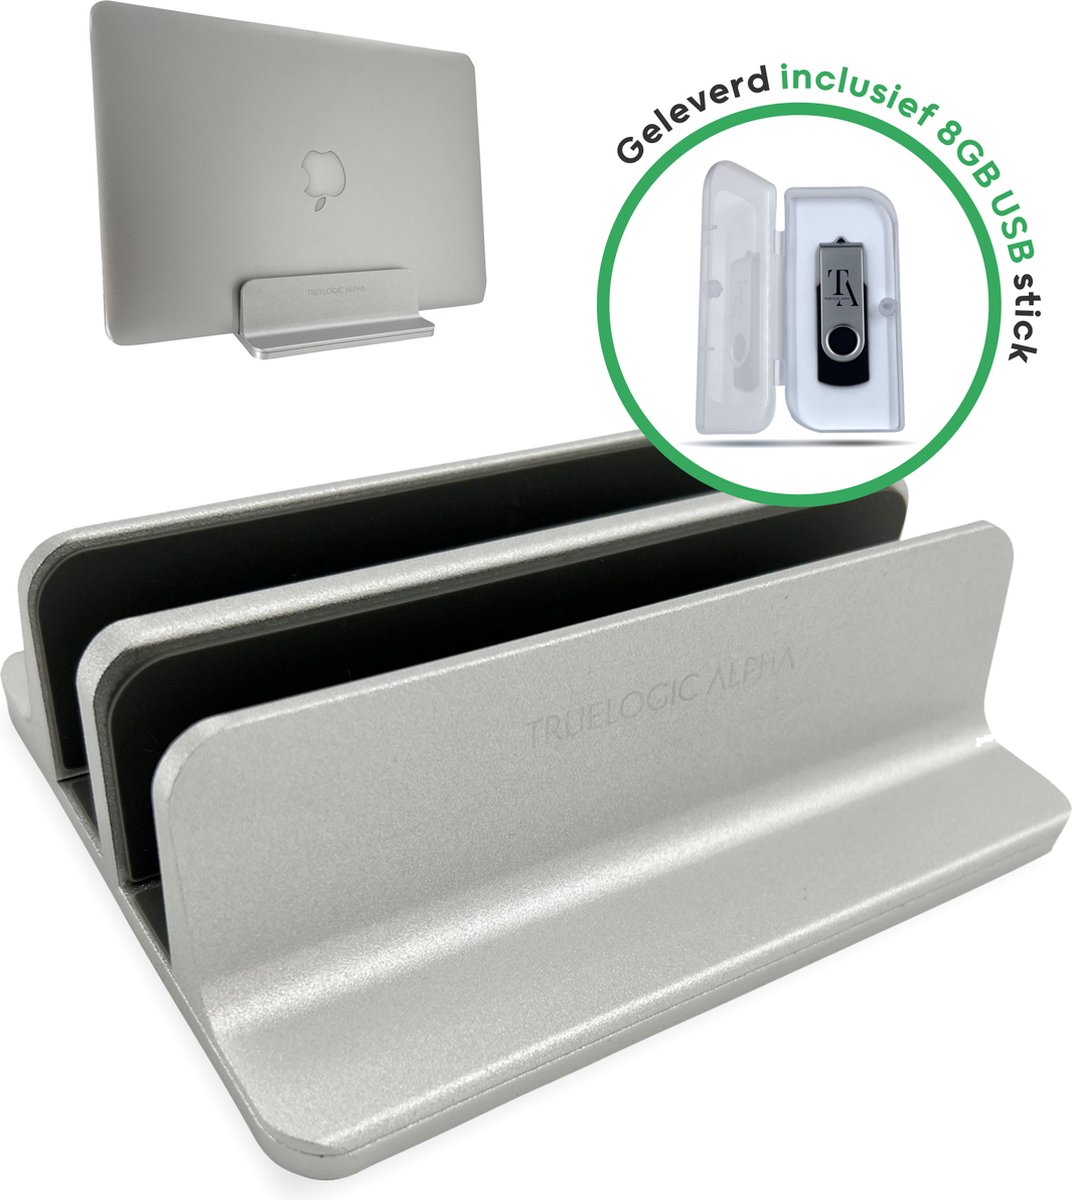 TrueLogic Alpha verticale laptop standaard - Geleverd inclusief 8GB USB stick - Laptop houder - Tablet standaard - Laptop standaard verstelbaar - Aluminium - Zilver